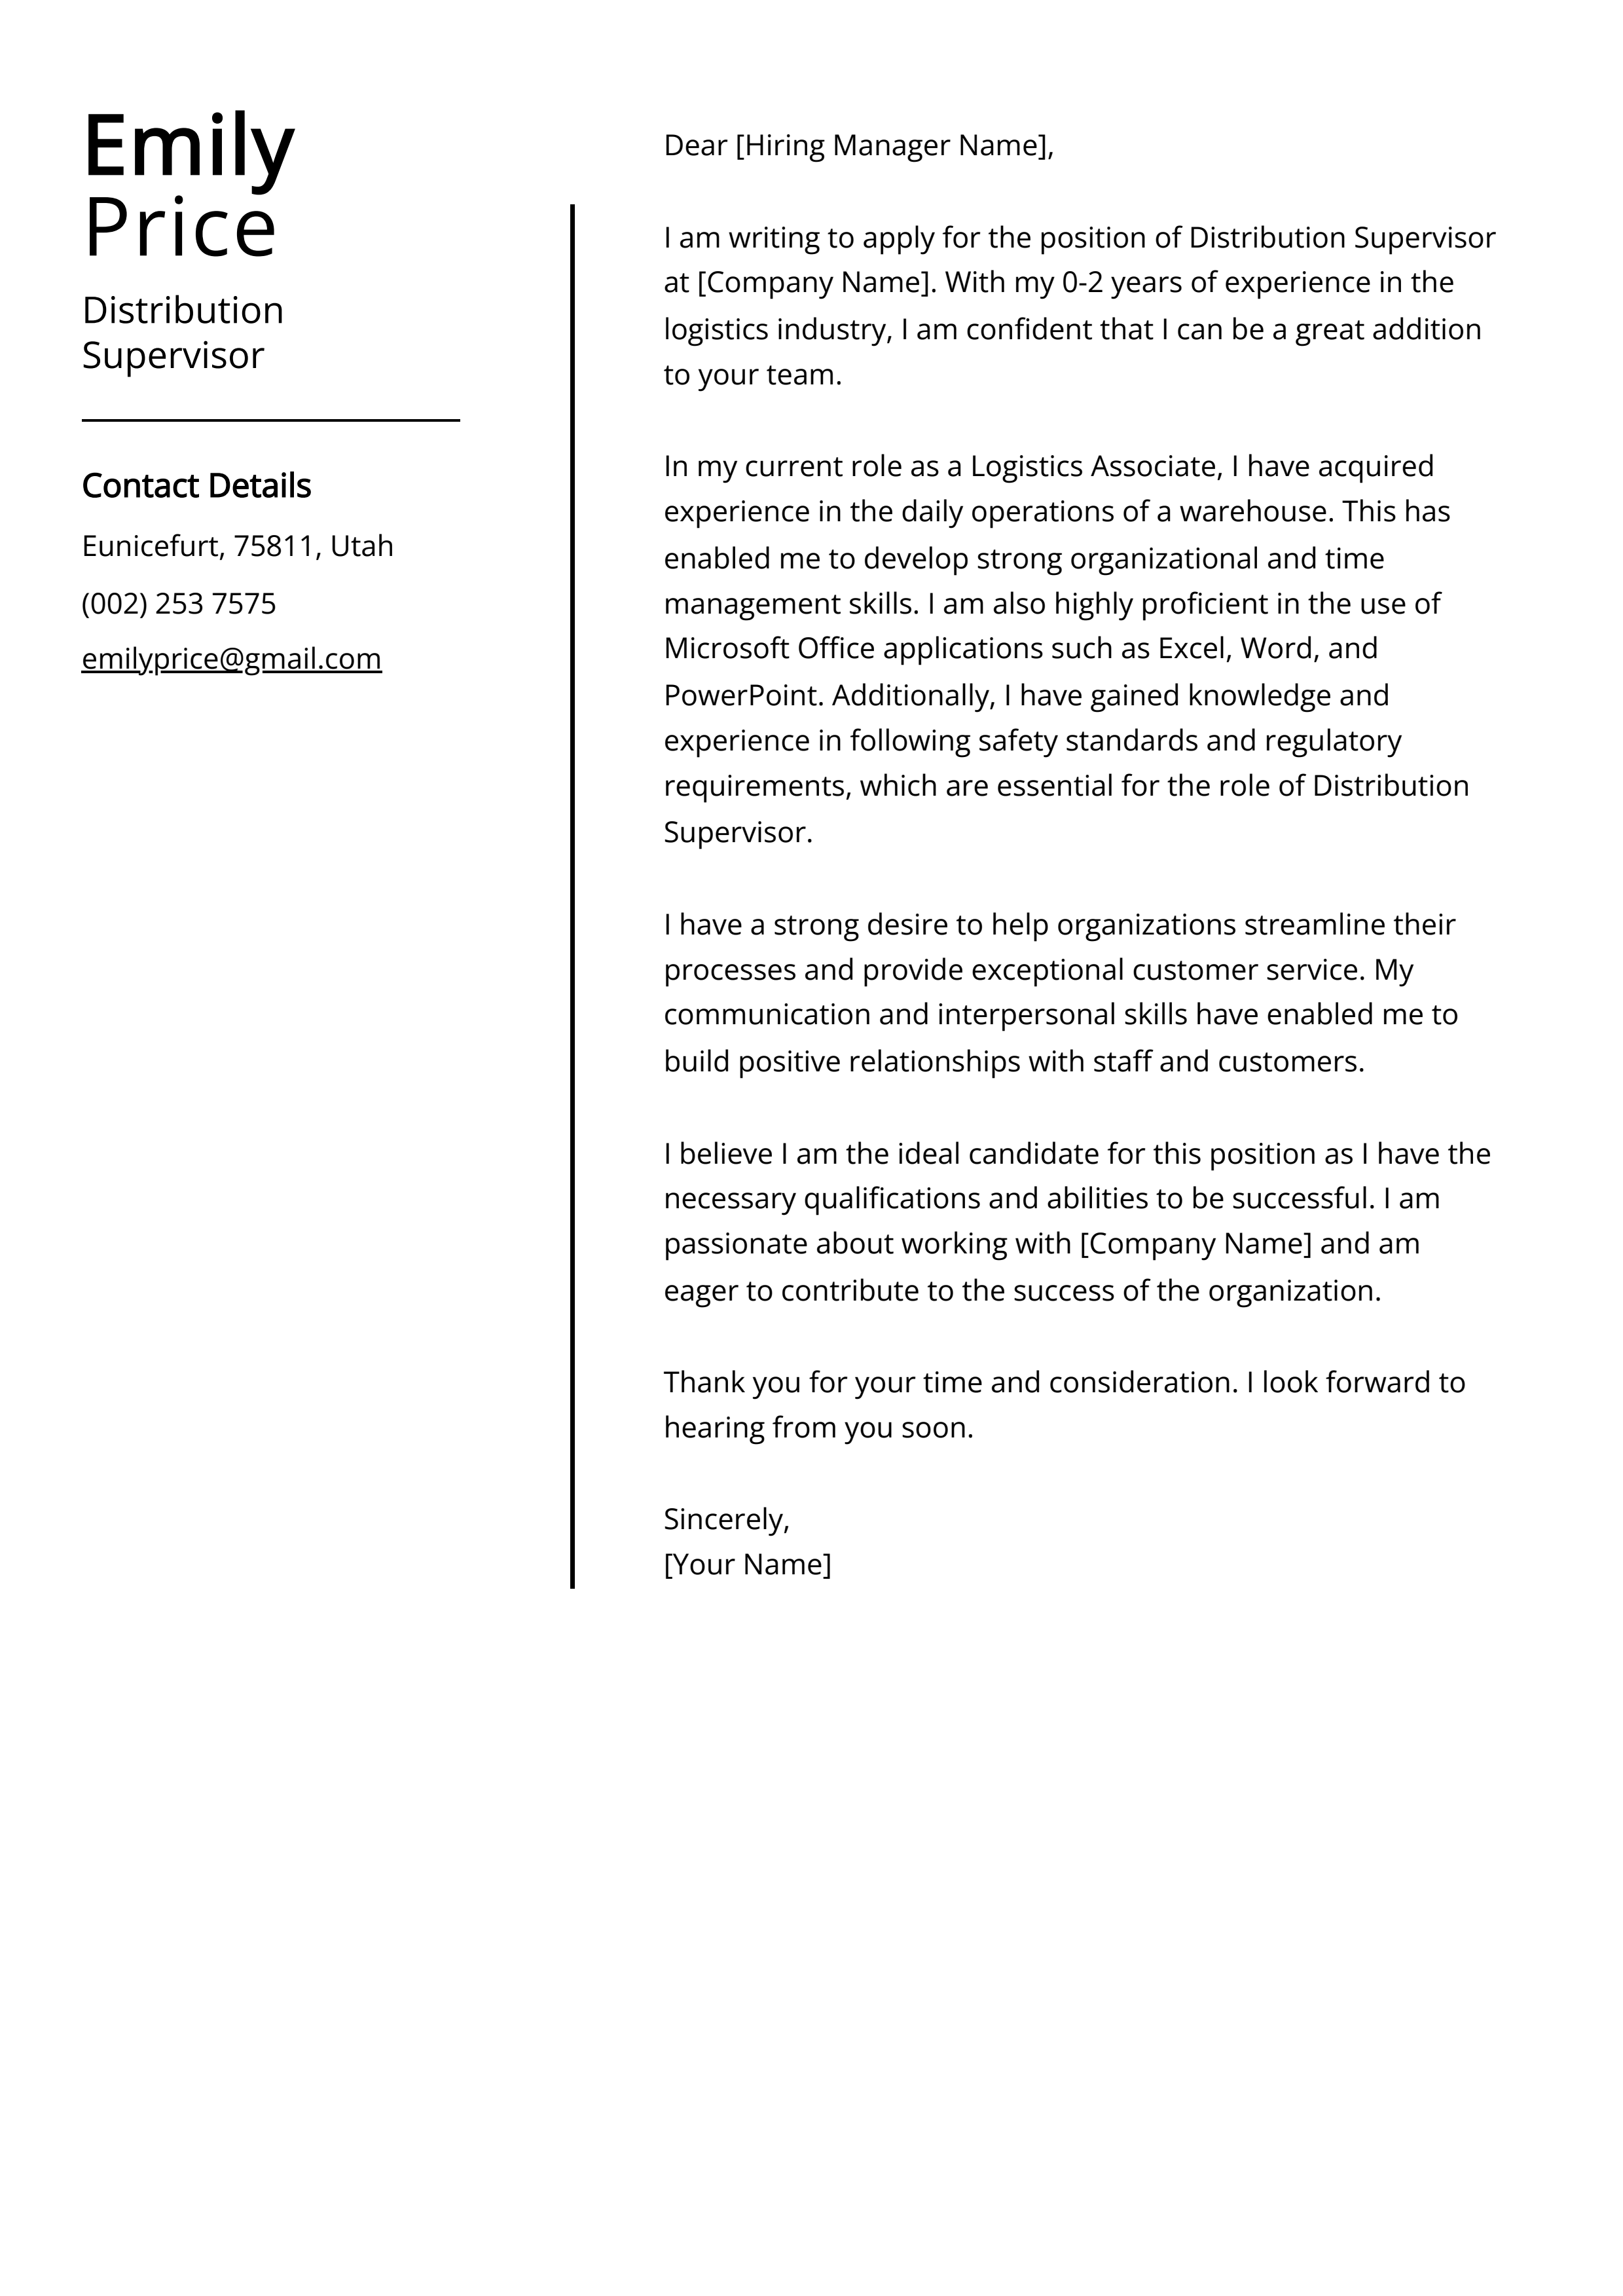 Distribution Supervisor Cover Letter Example